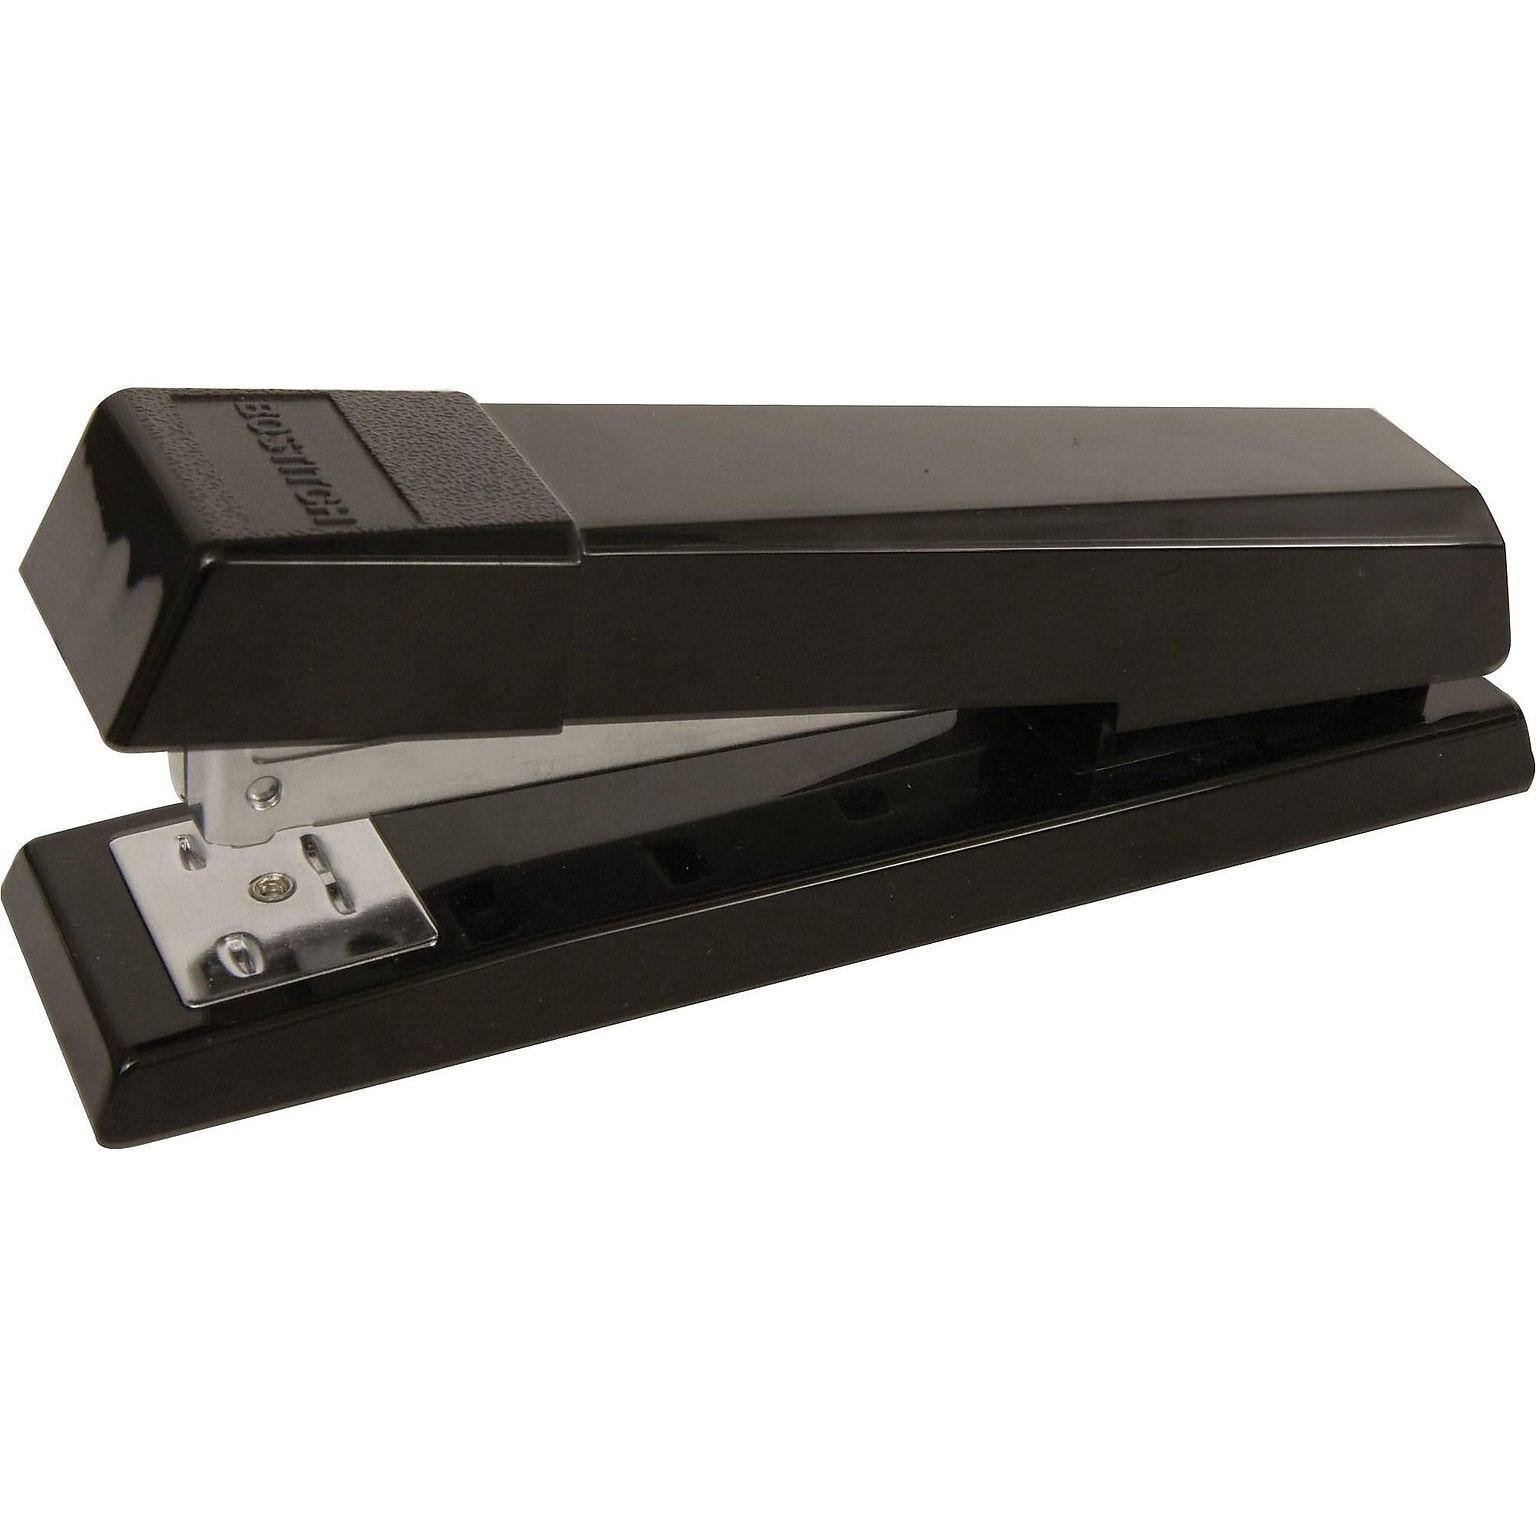 Bostitch No-Jam Desktop Stapler, 20 Sheet Capacity, Black (B600-BLACK)